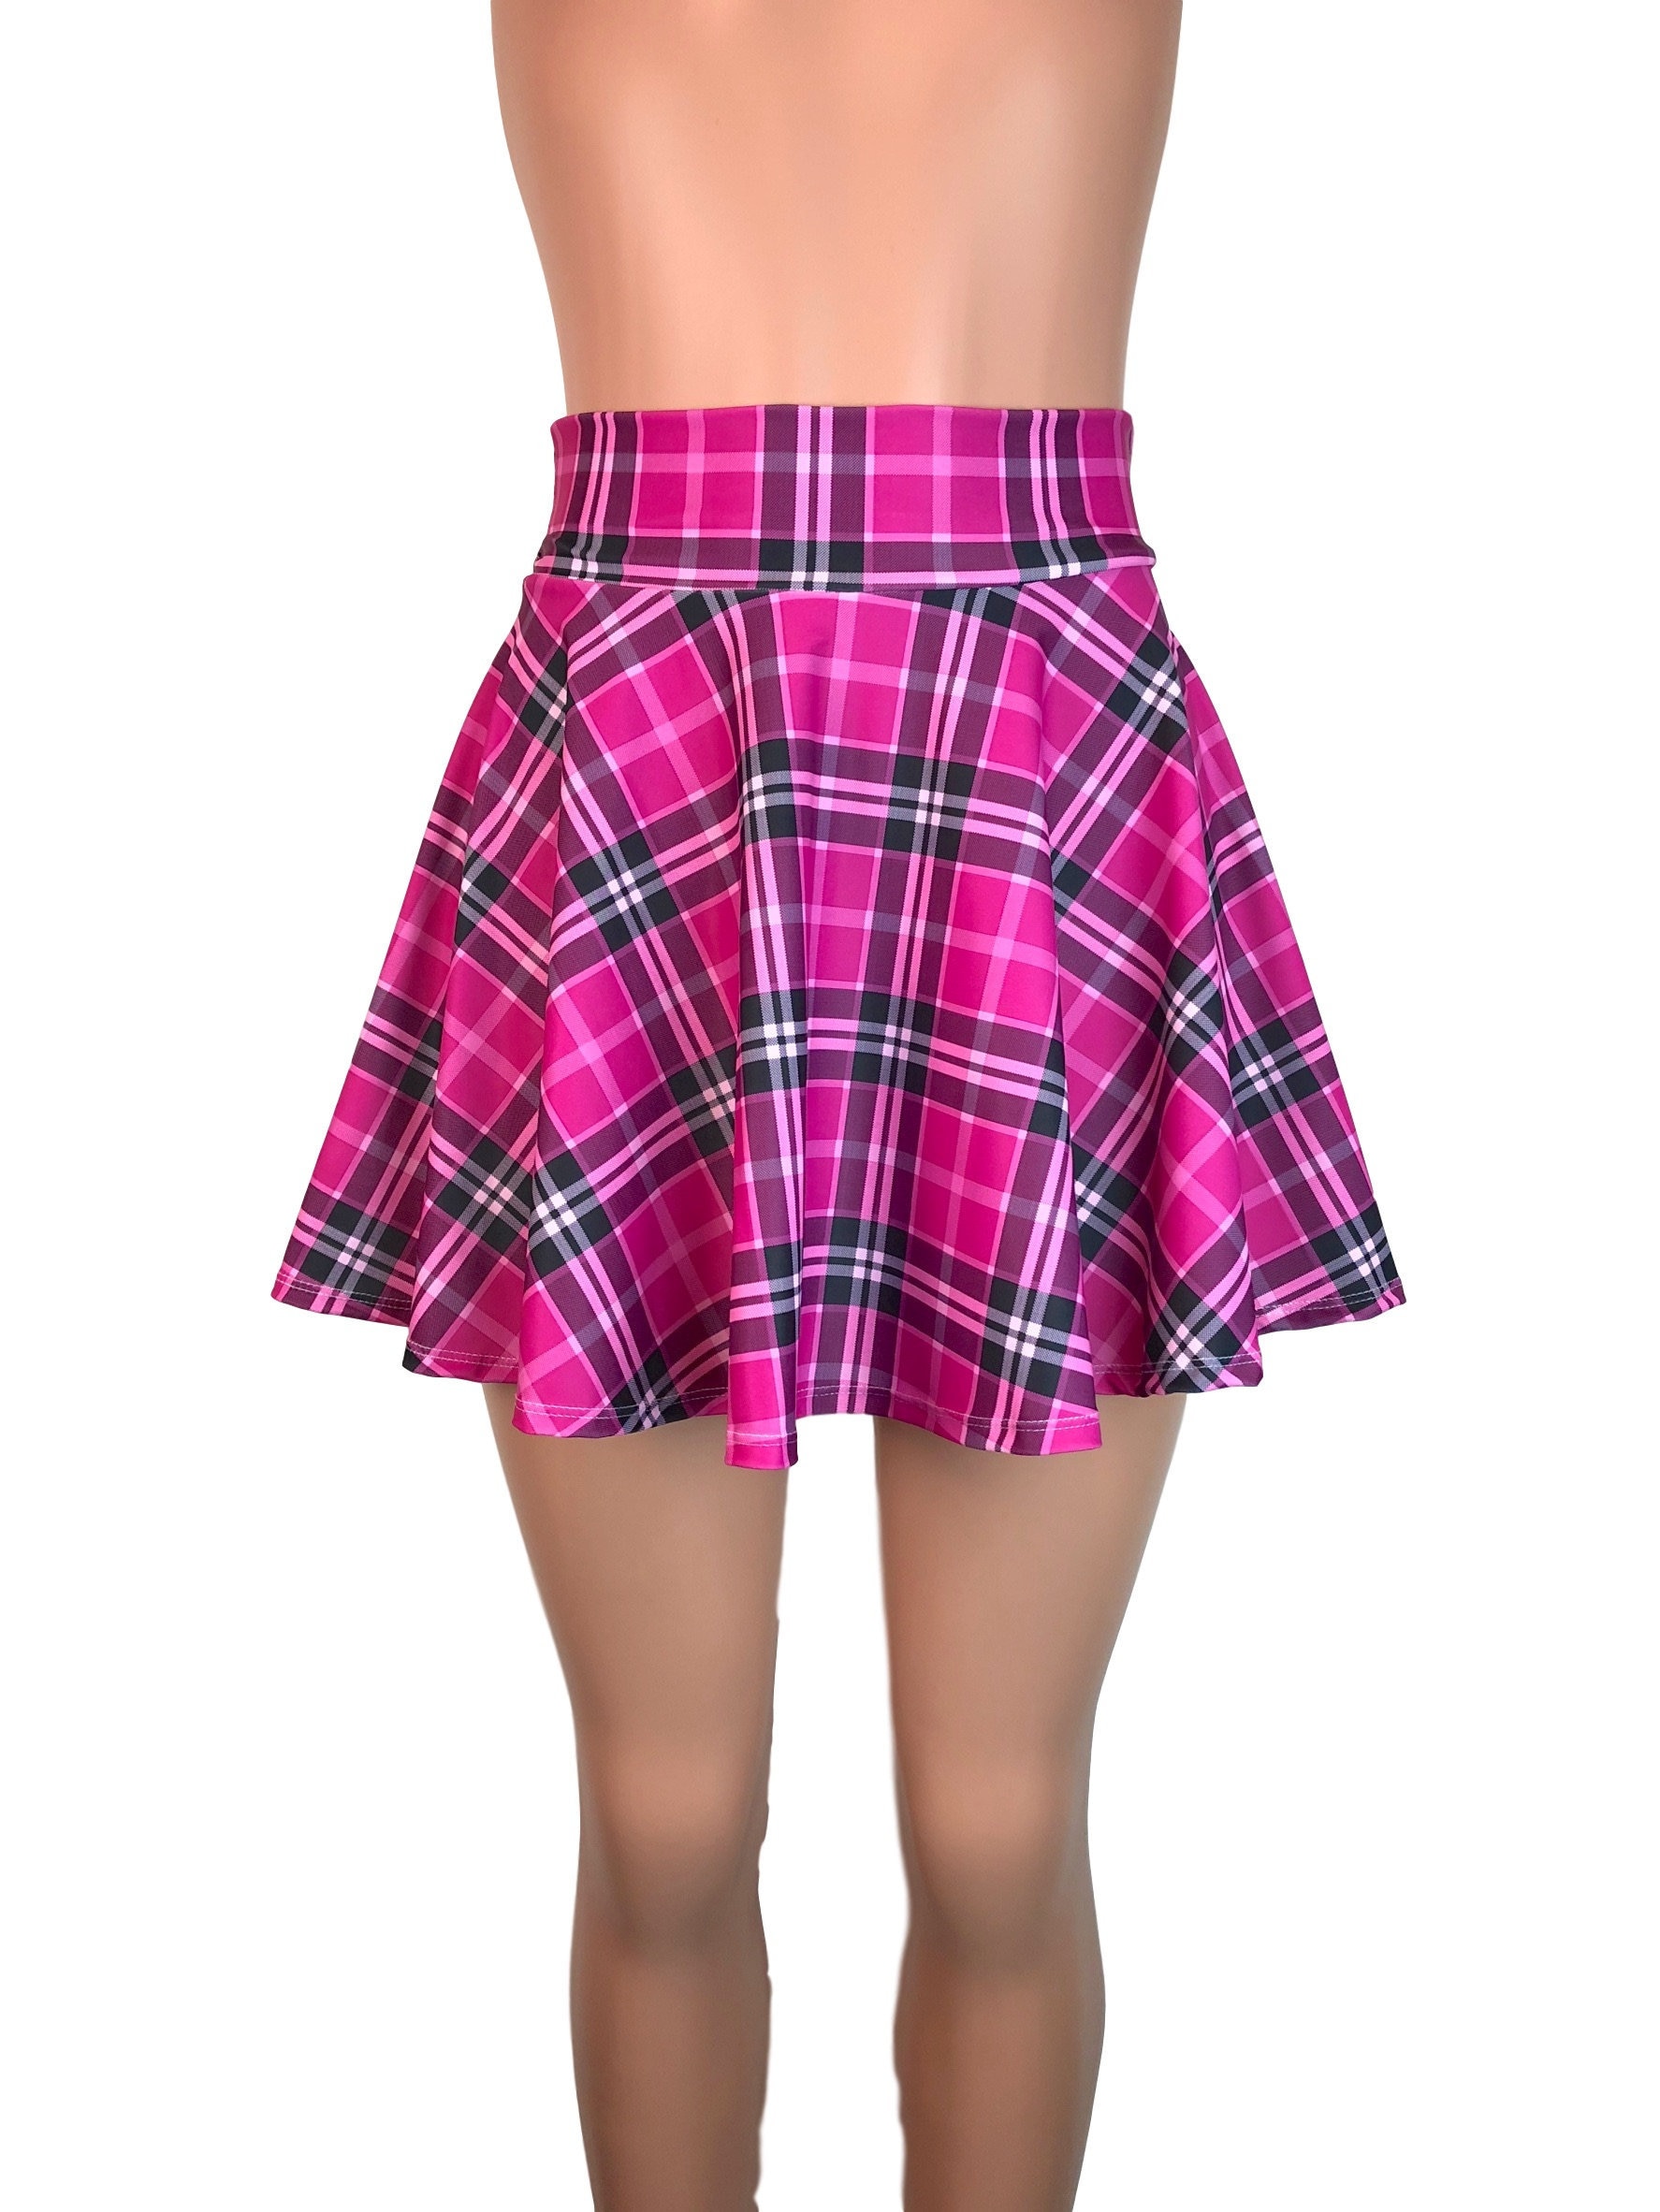 Pink Plaid High Waisted Skater Skirt Clubwear, Rave Wear, Mini Circle Skirt  